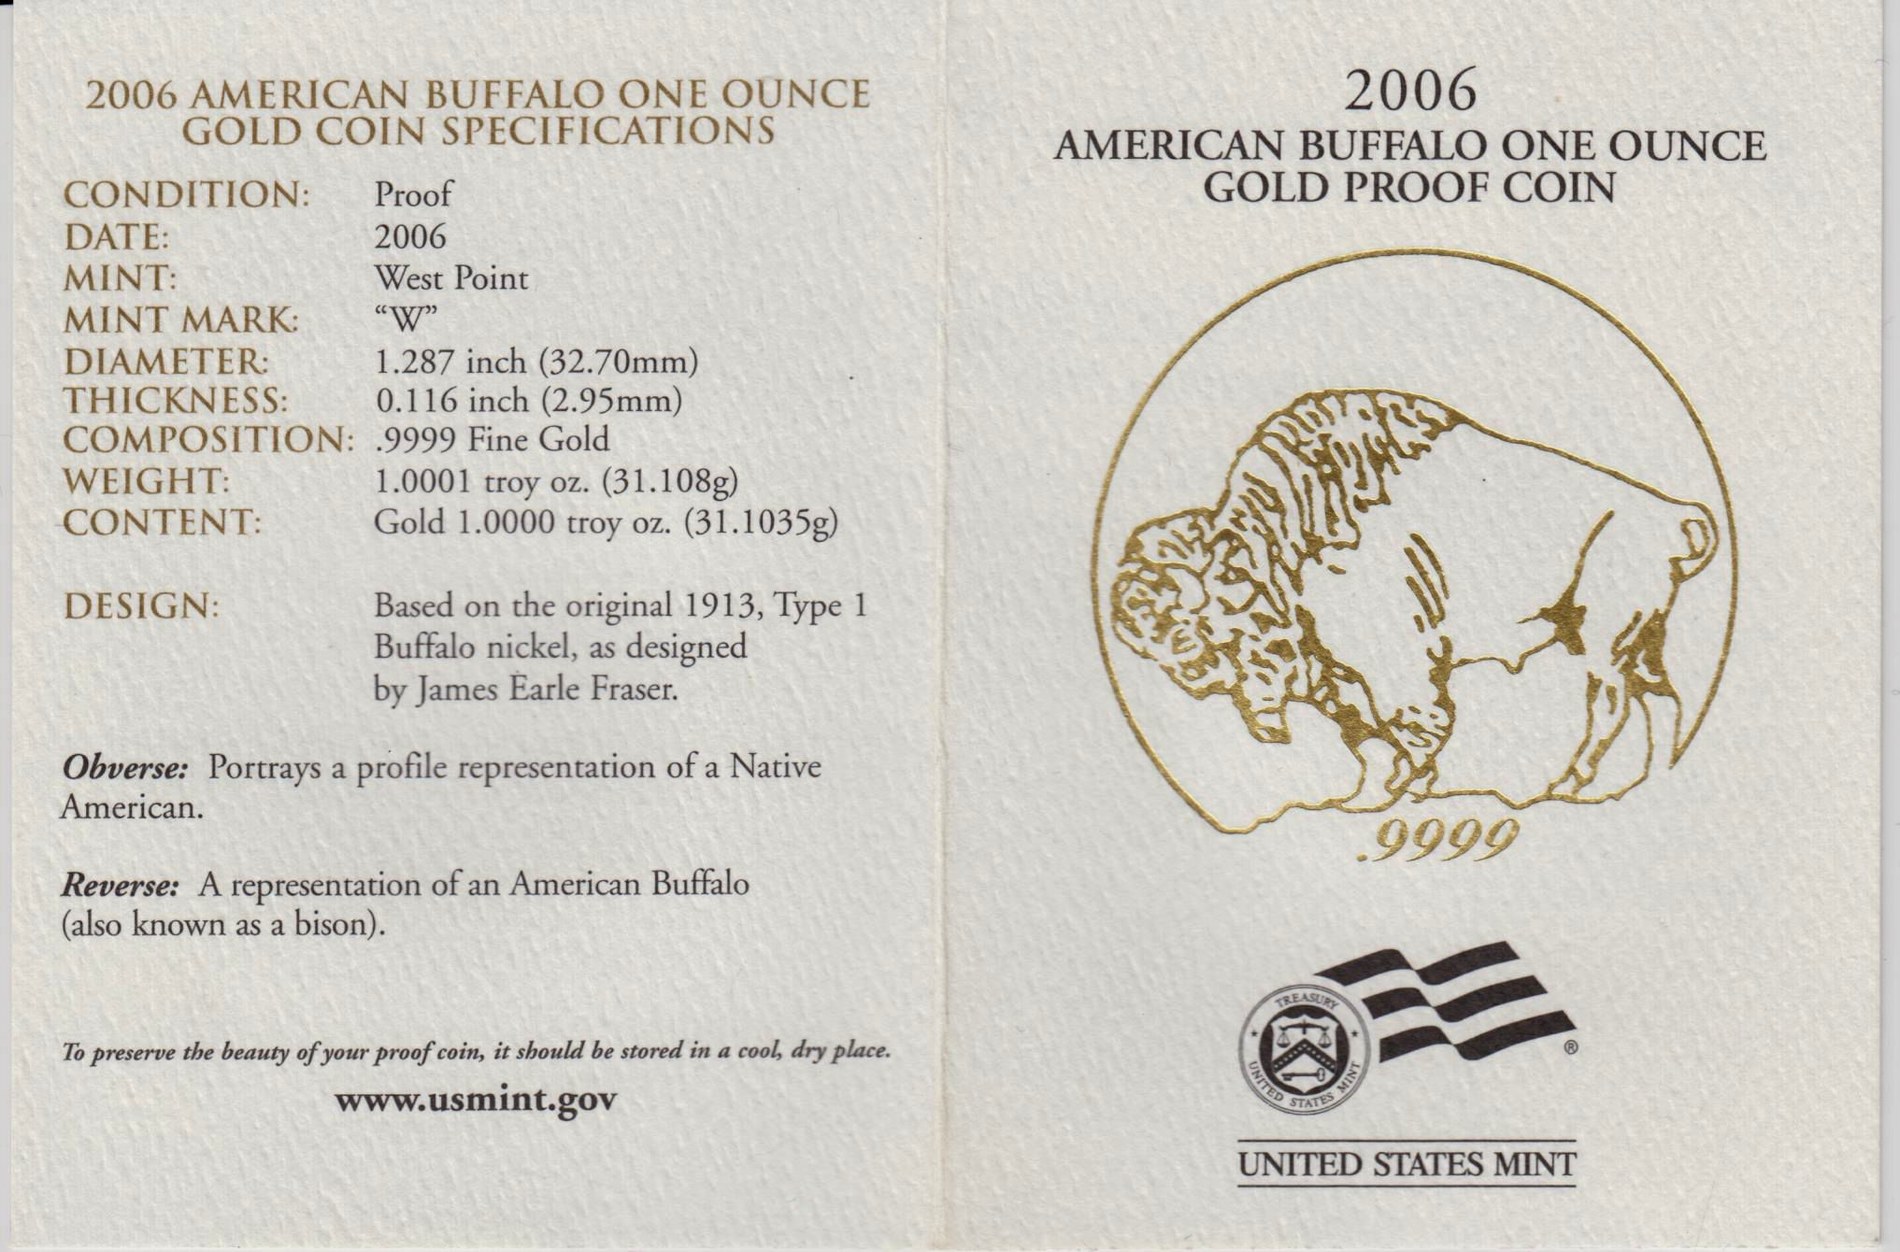 USA 50 Dollar 2007 W American Buffalo - 1 Unze Proof in Original